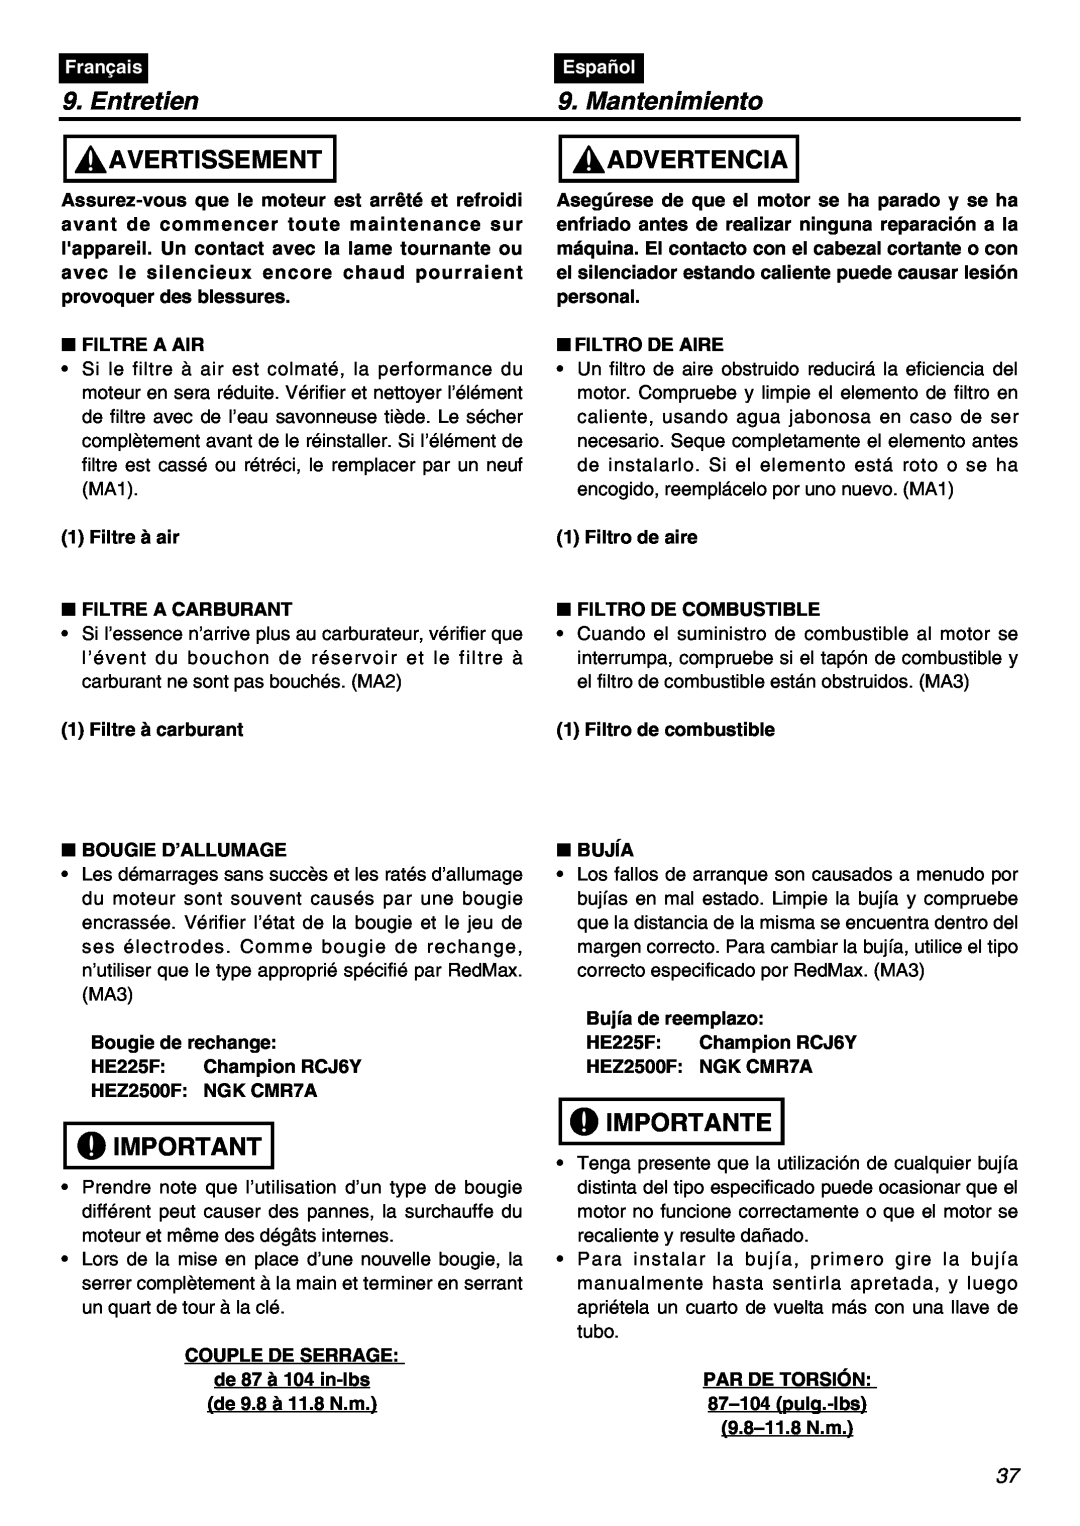 Zenoah HE225F, HEZ2500F manual Entretien, Mantenimiento, Avertissement, Advertencia, Importante, Français, Español 